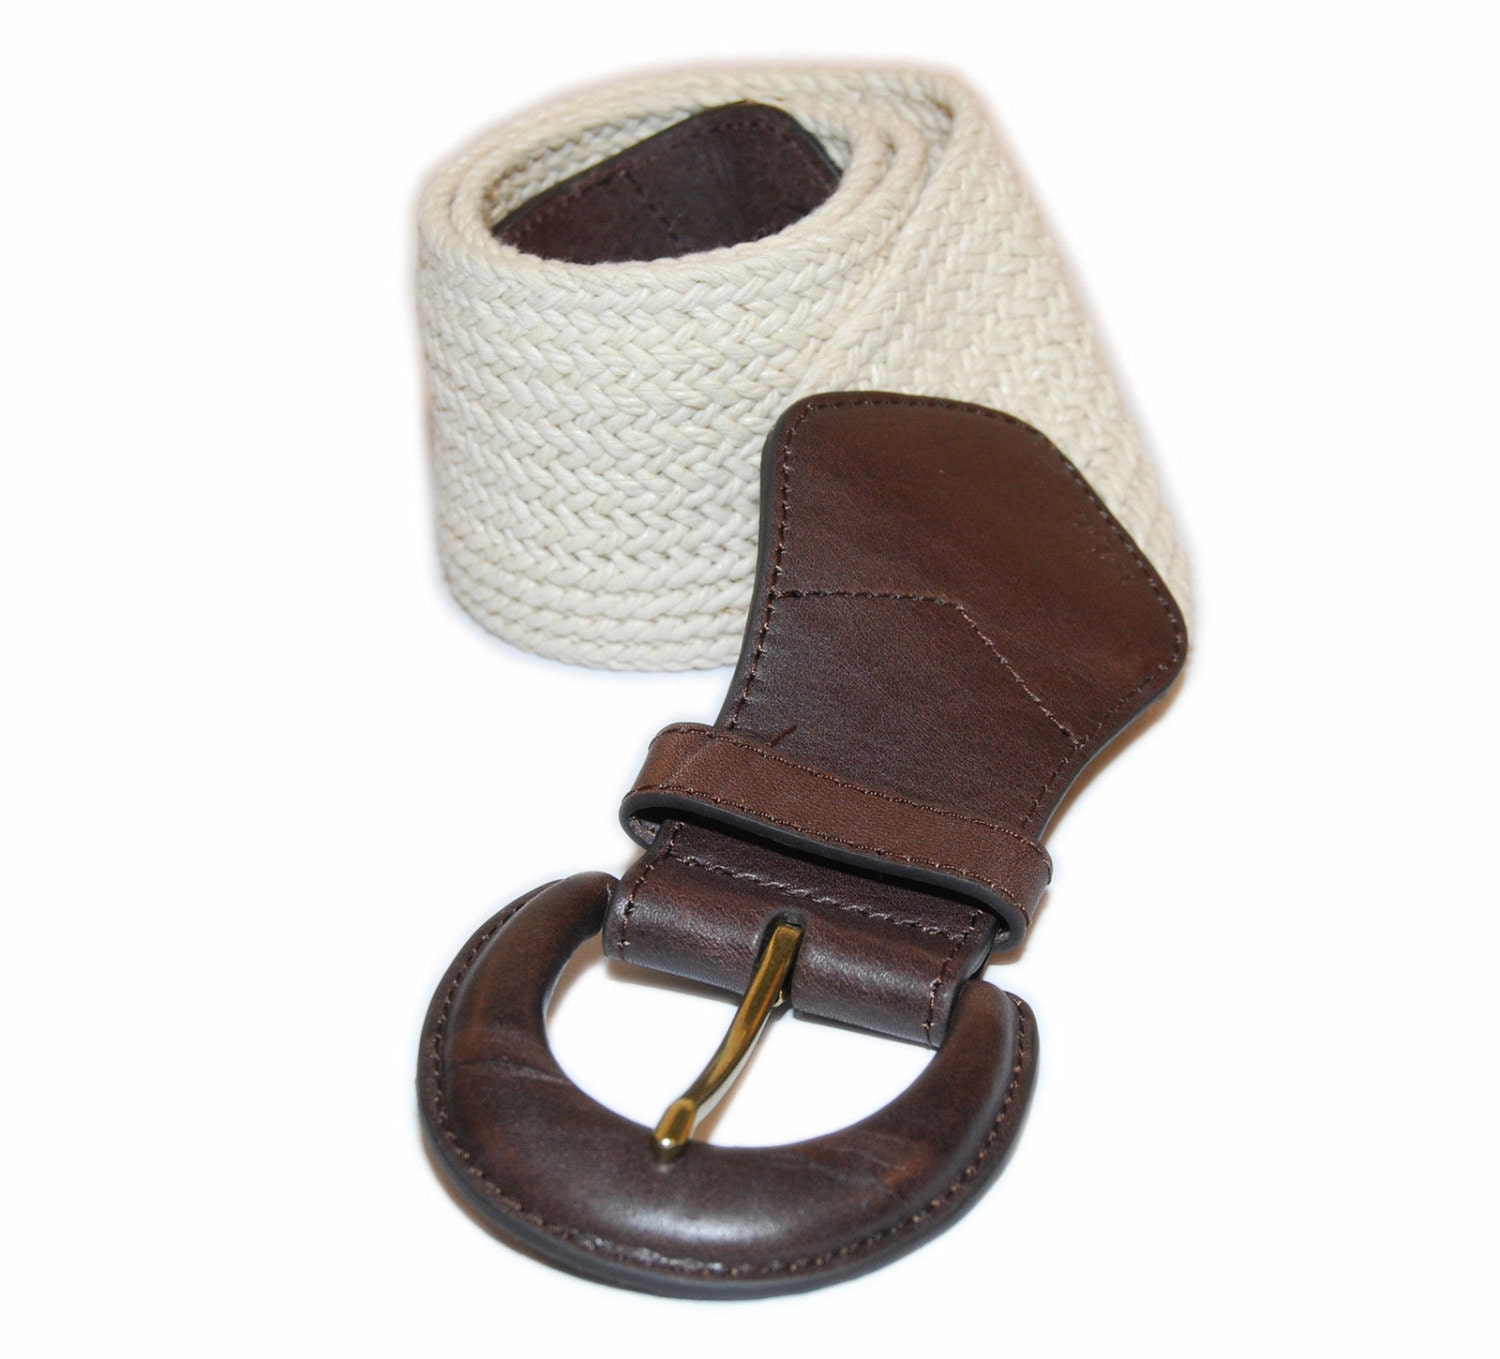 Preppy Chic Ralph Lauren Collection Rugby Womenâs Woven Knit Leather Wide Dress Belt Brown Cream 